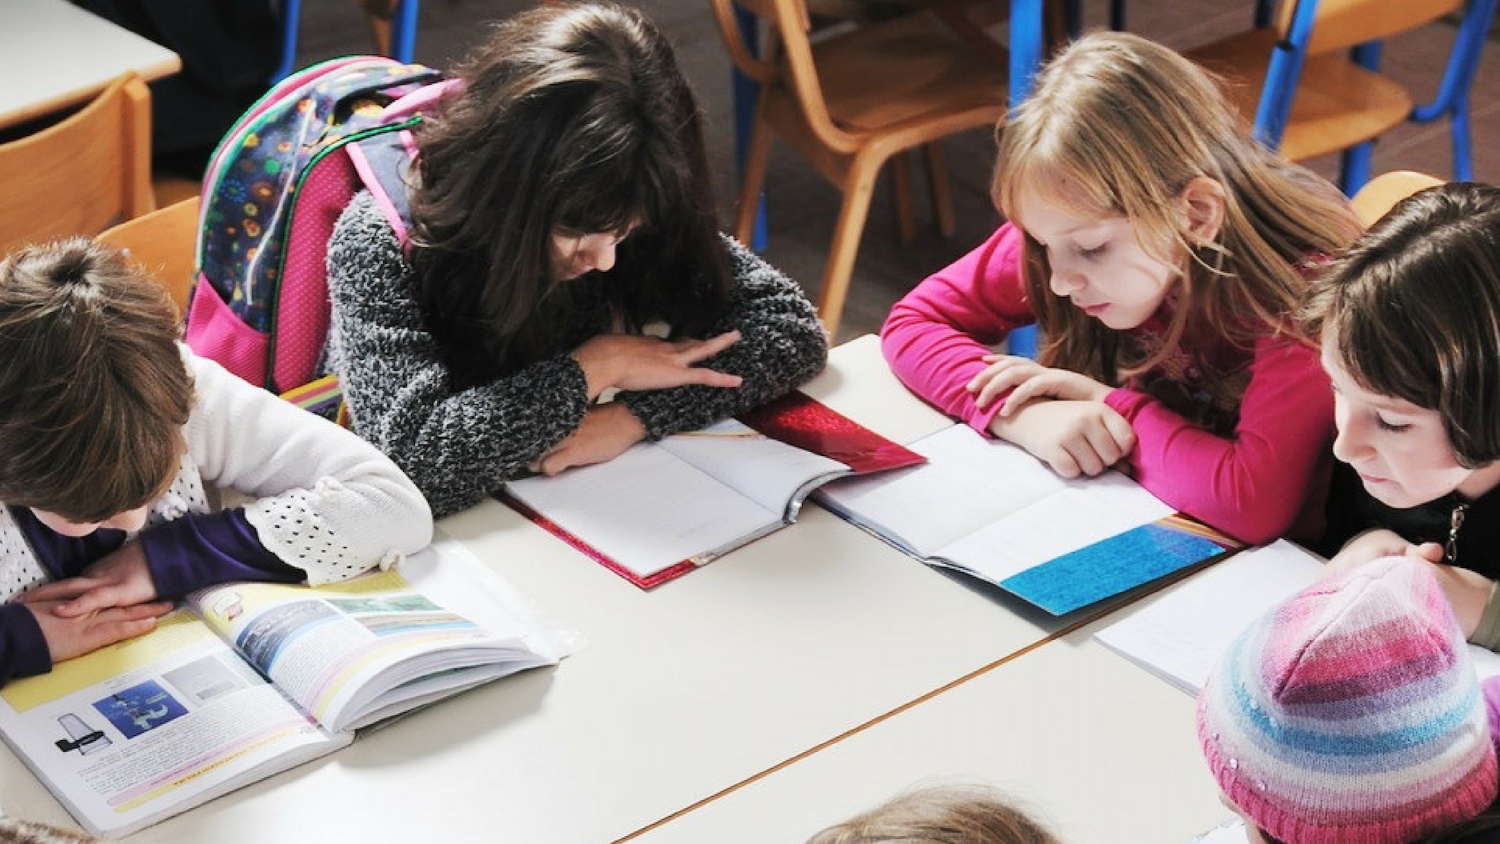 Children in a classroom reading books